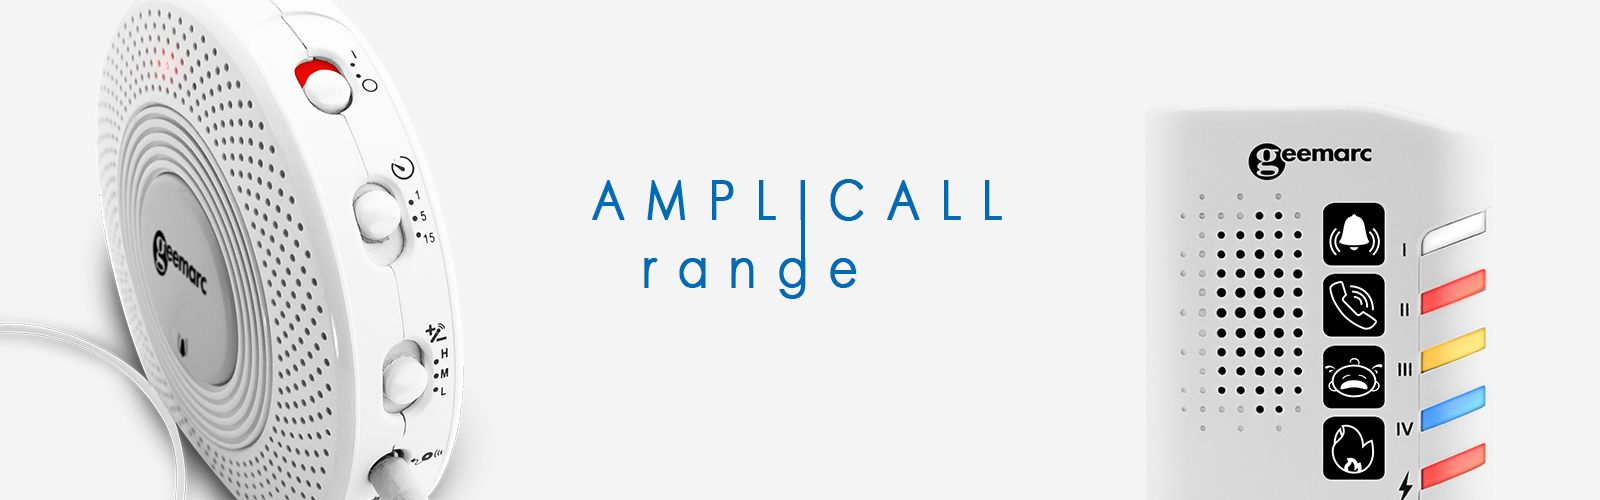 banner-amplicall-range